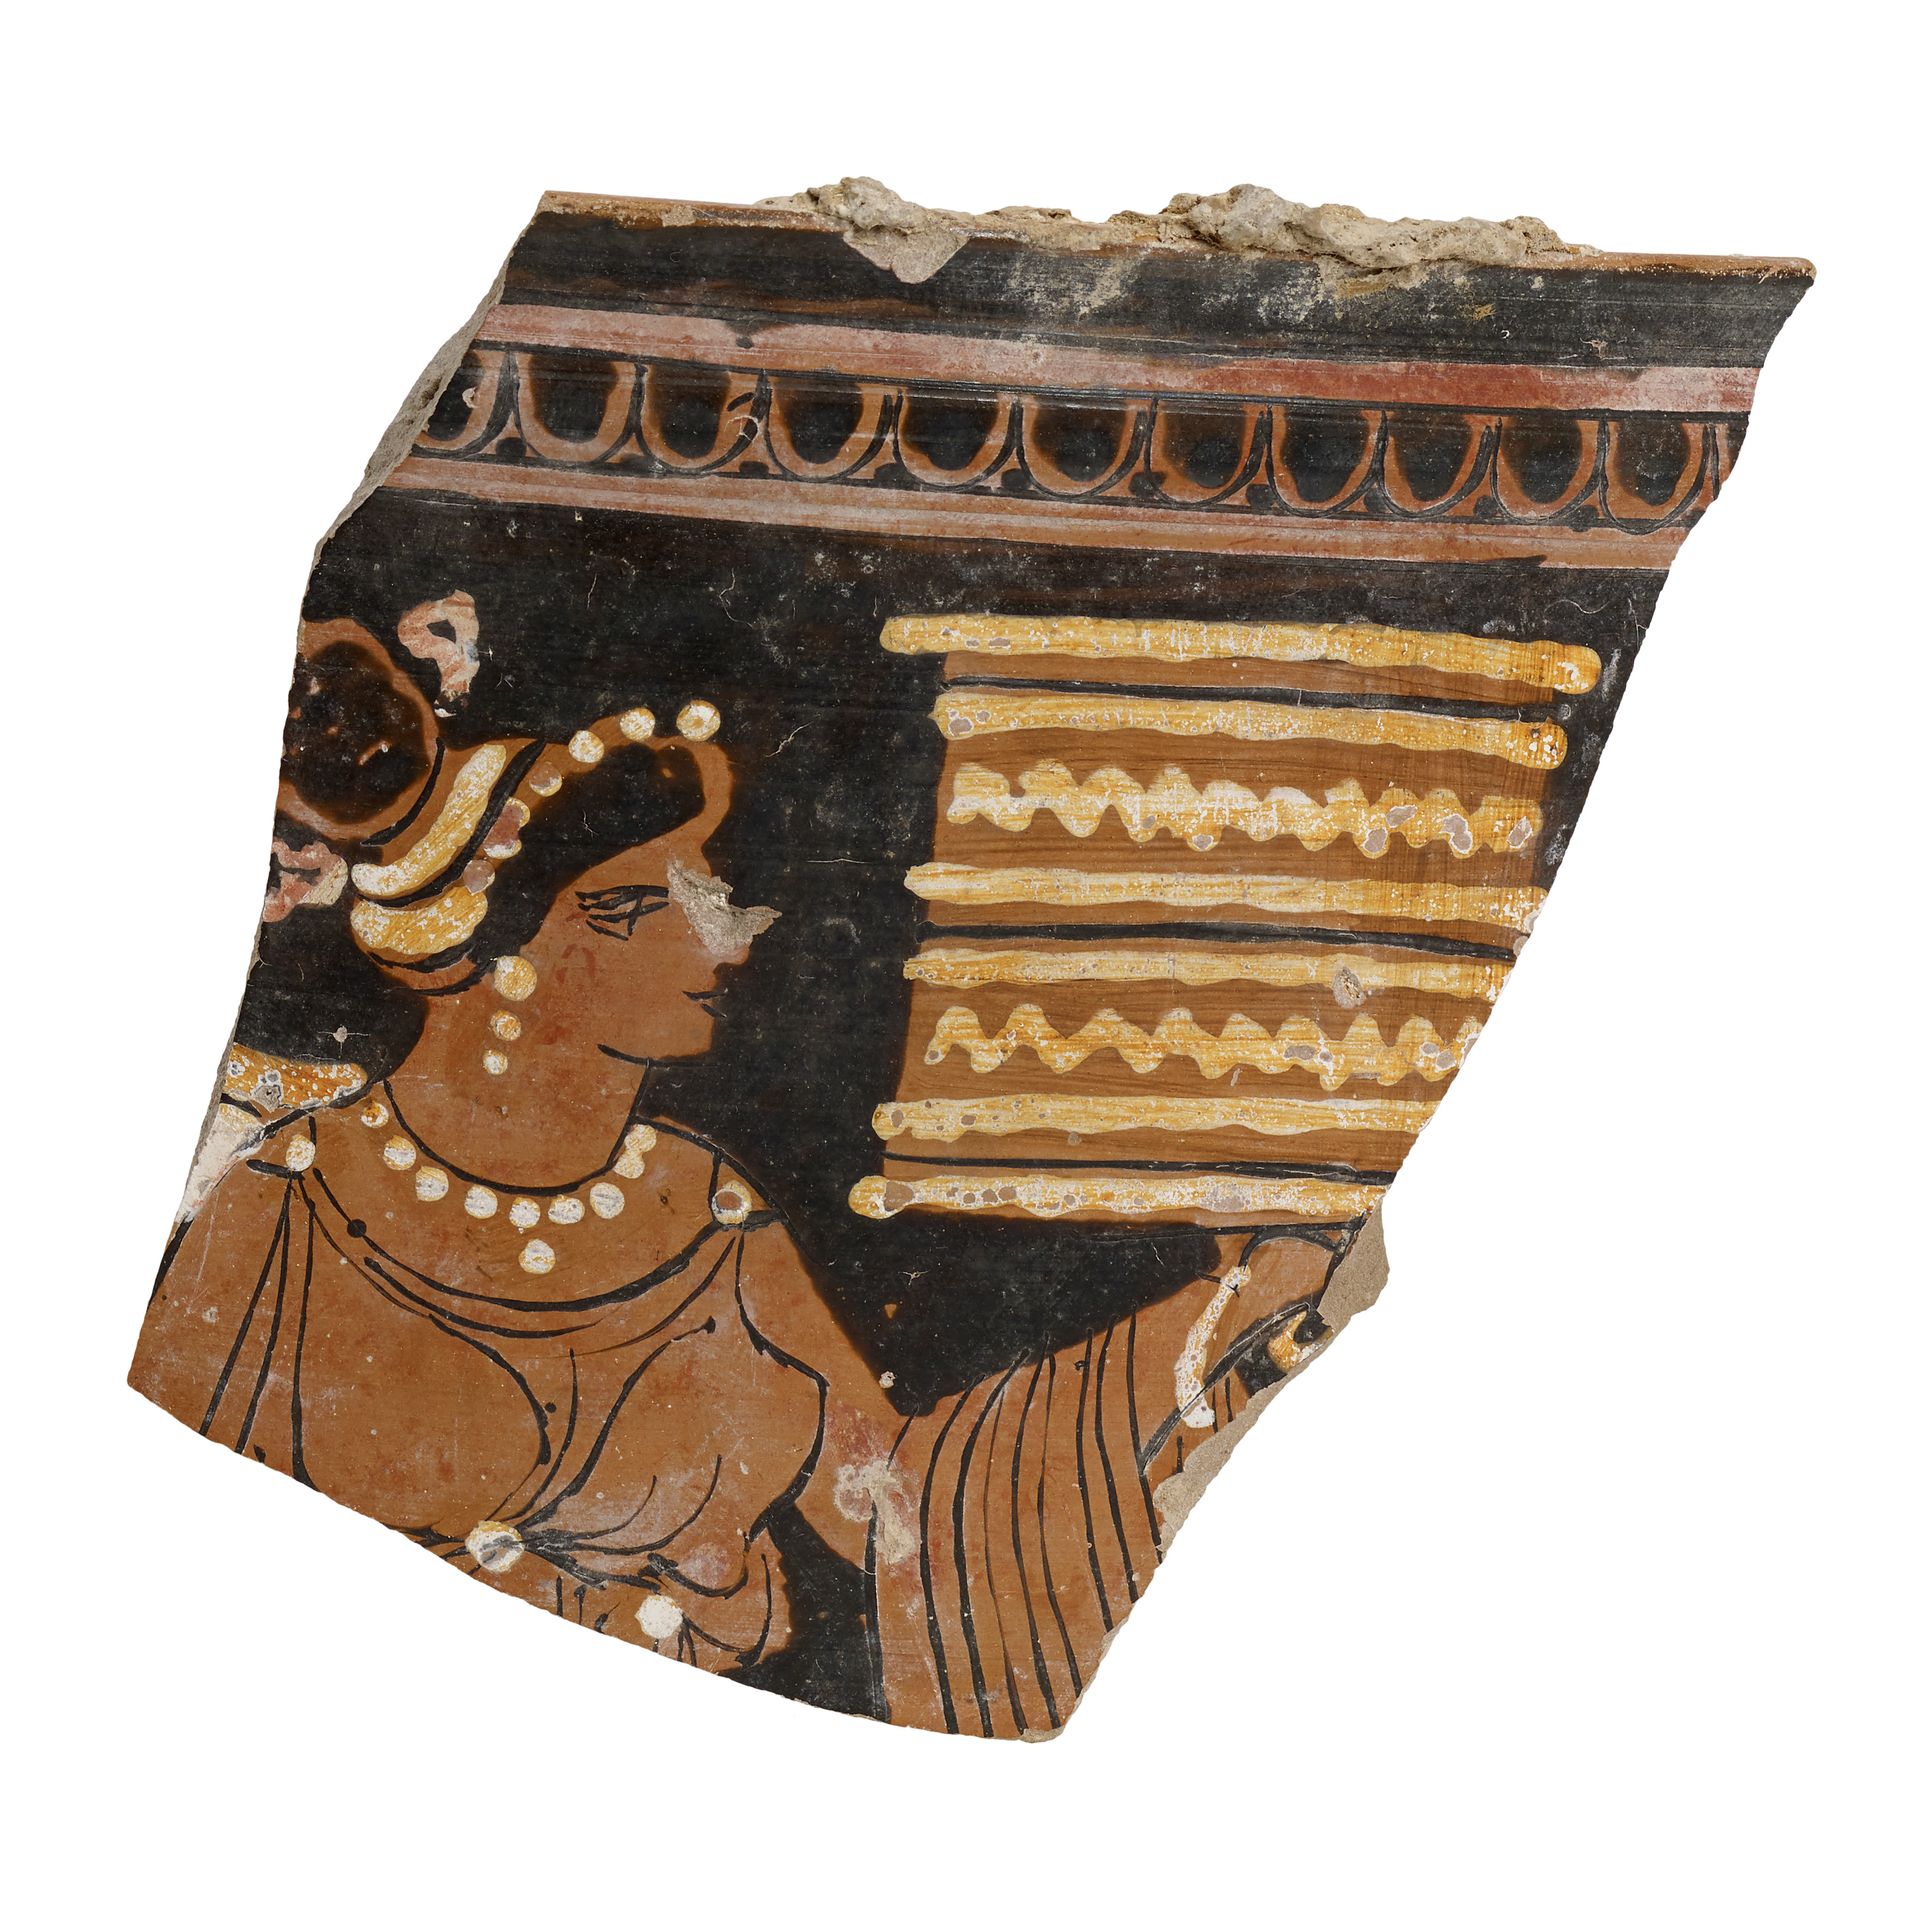 Null 阿普利亚碎片与红色人物

日期：公元前4世纪。C.

材料和技术：粉红色的figulina粘土，黑色油漆，白色，橙色和红色油漆，在陶轮上建模。

镂空&hellip;